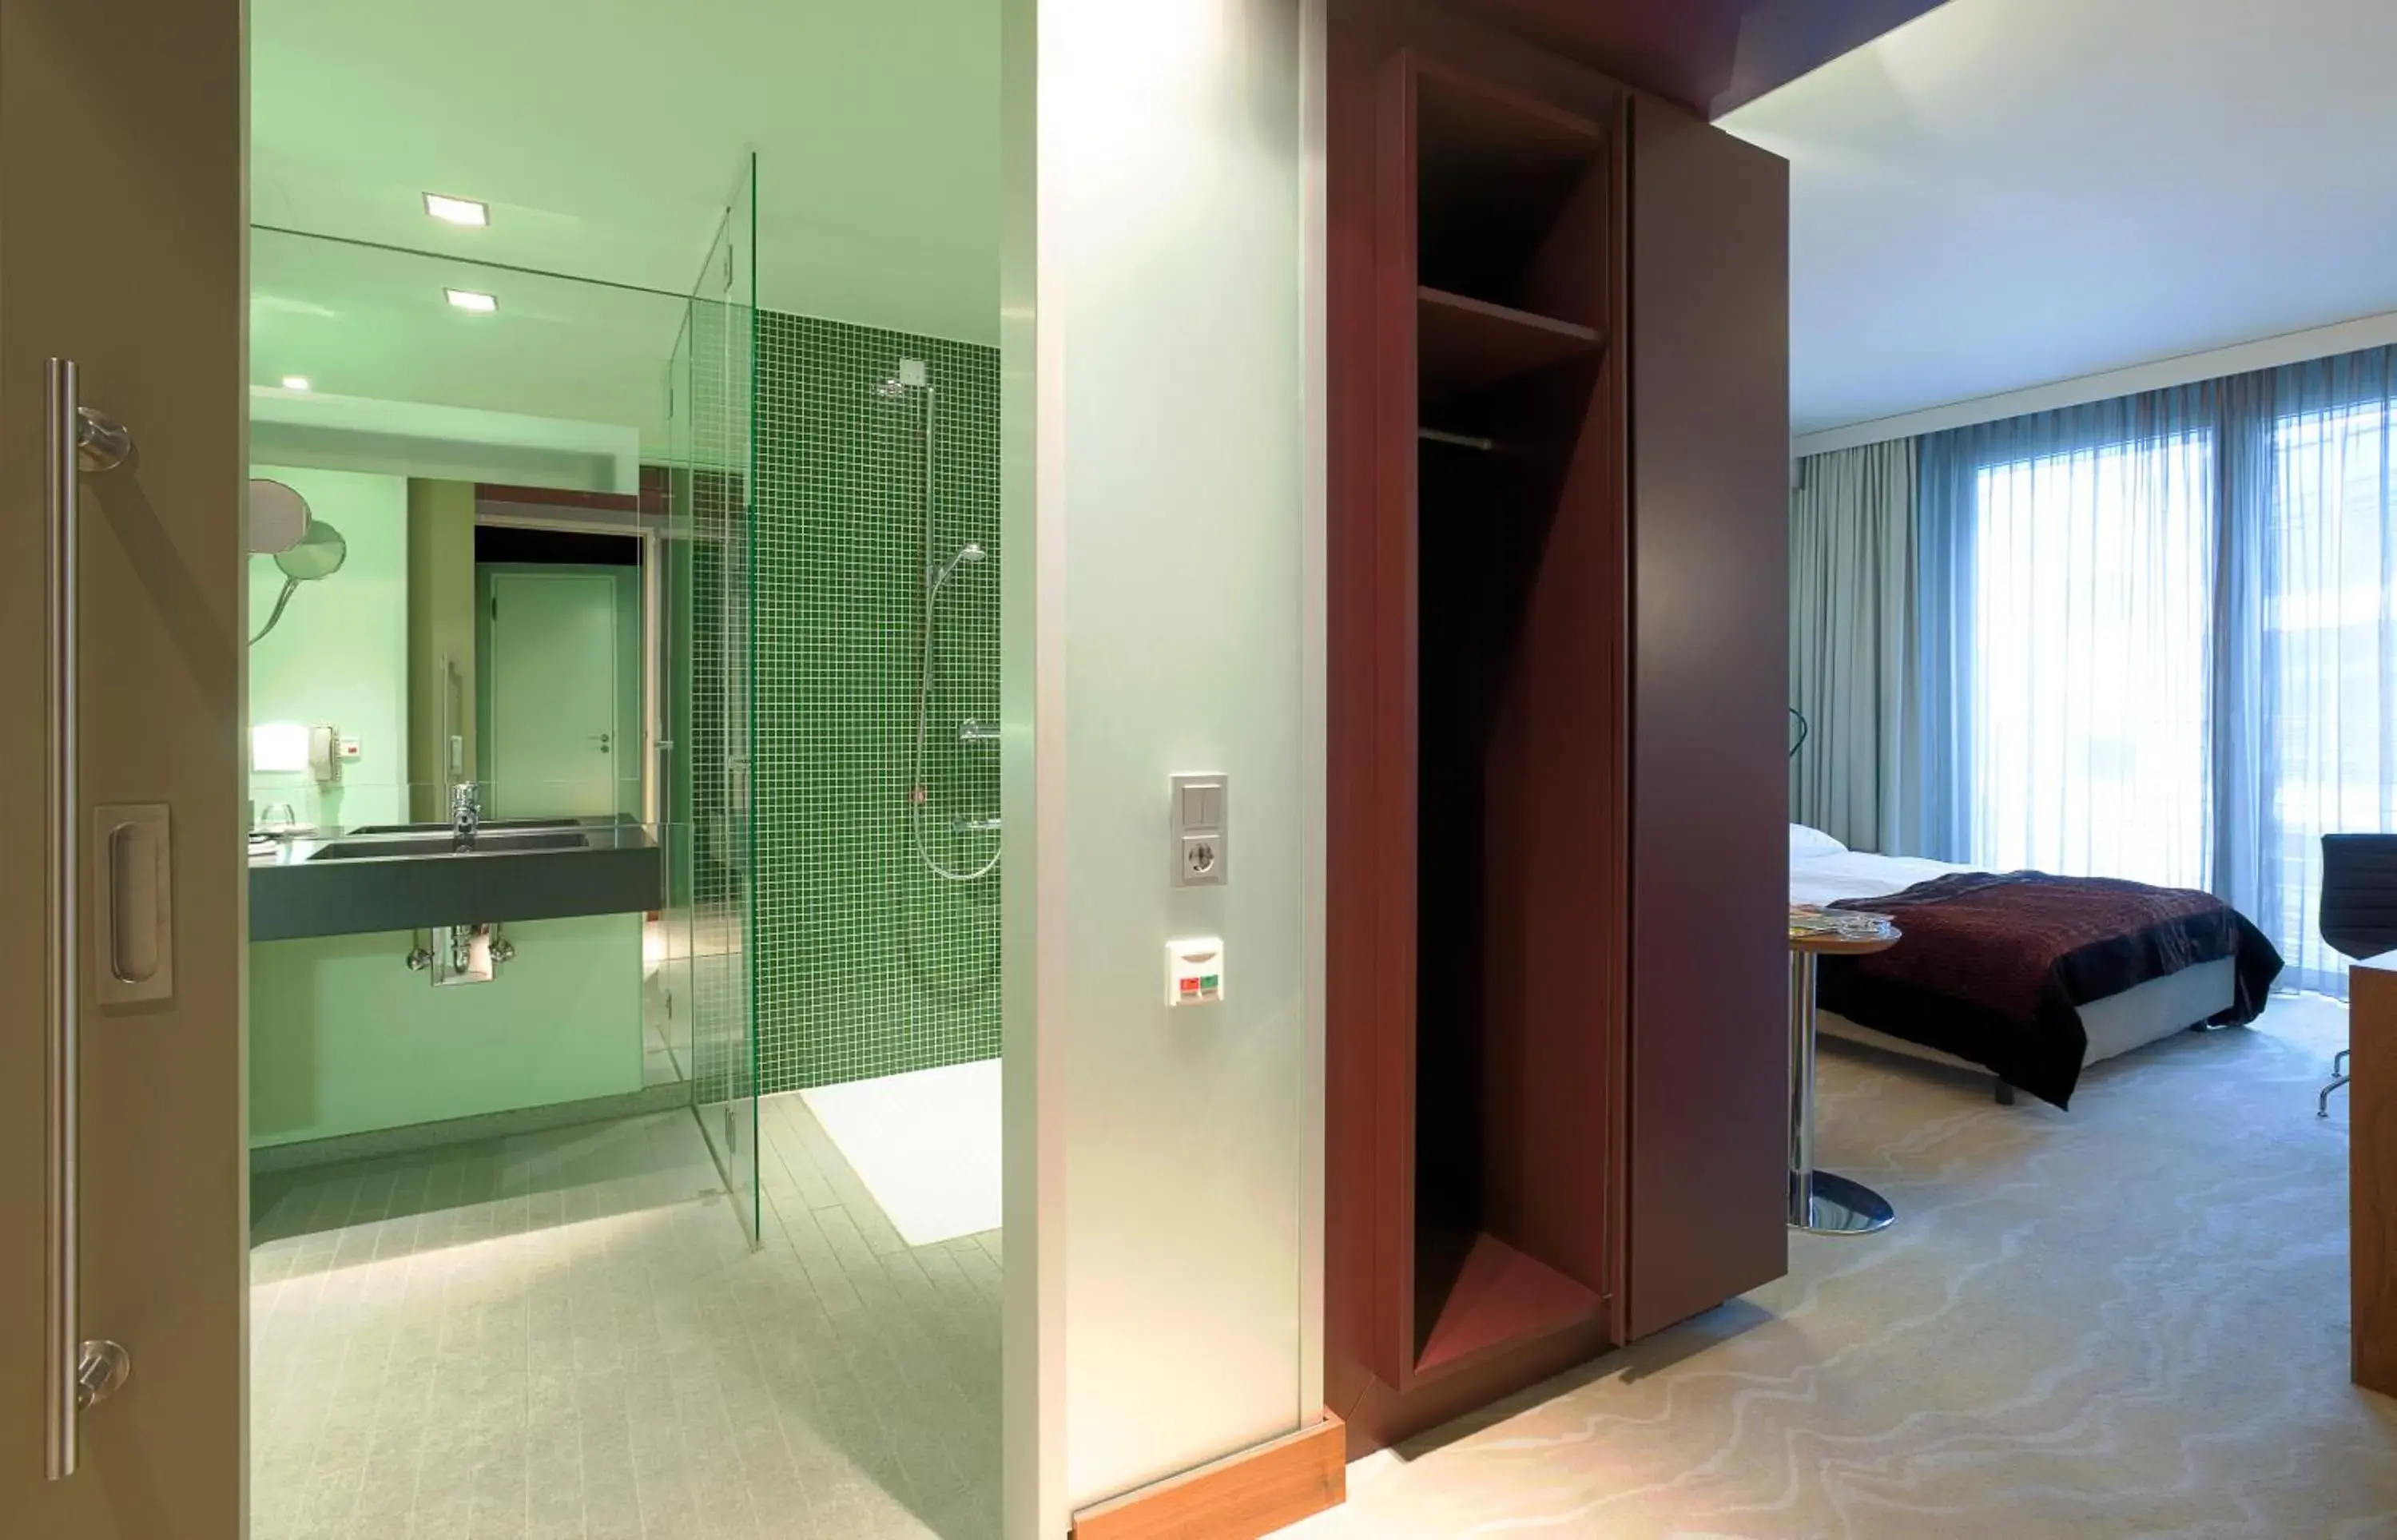 Photo of the whole room, Bathroom in Radisson Blu Hotel, Cologne